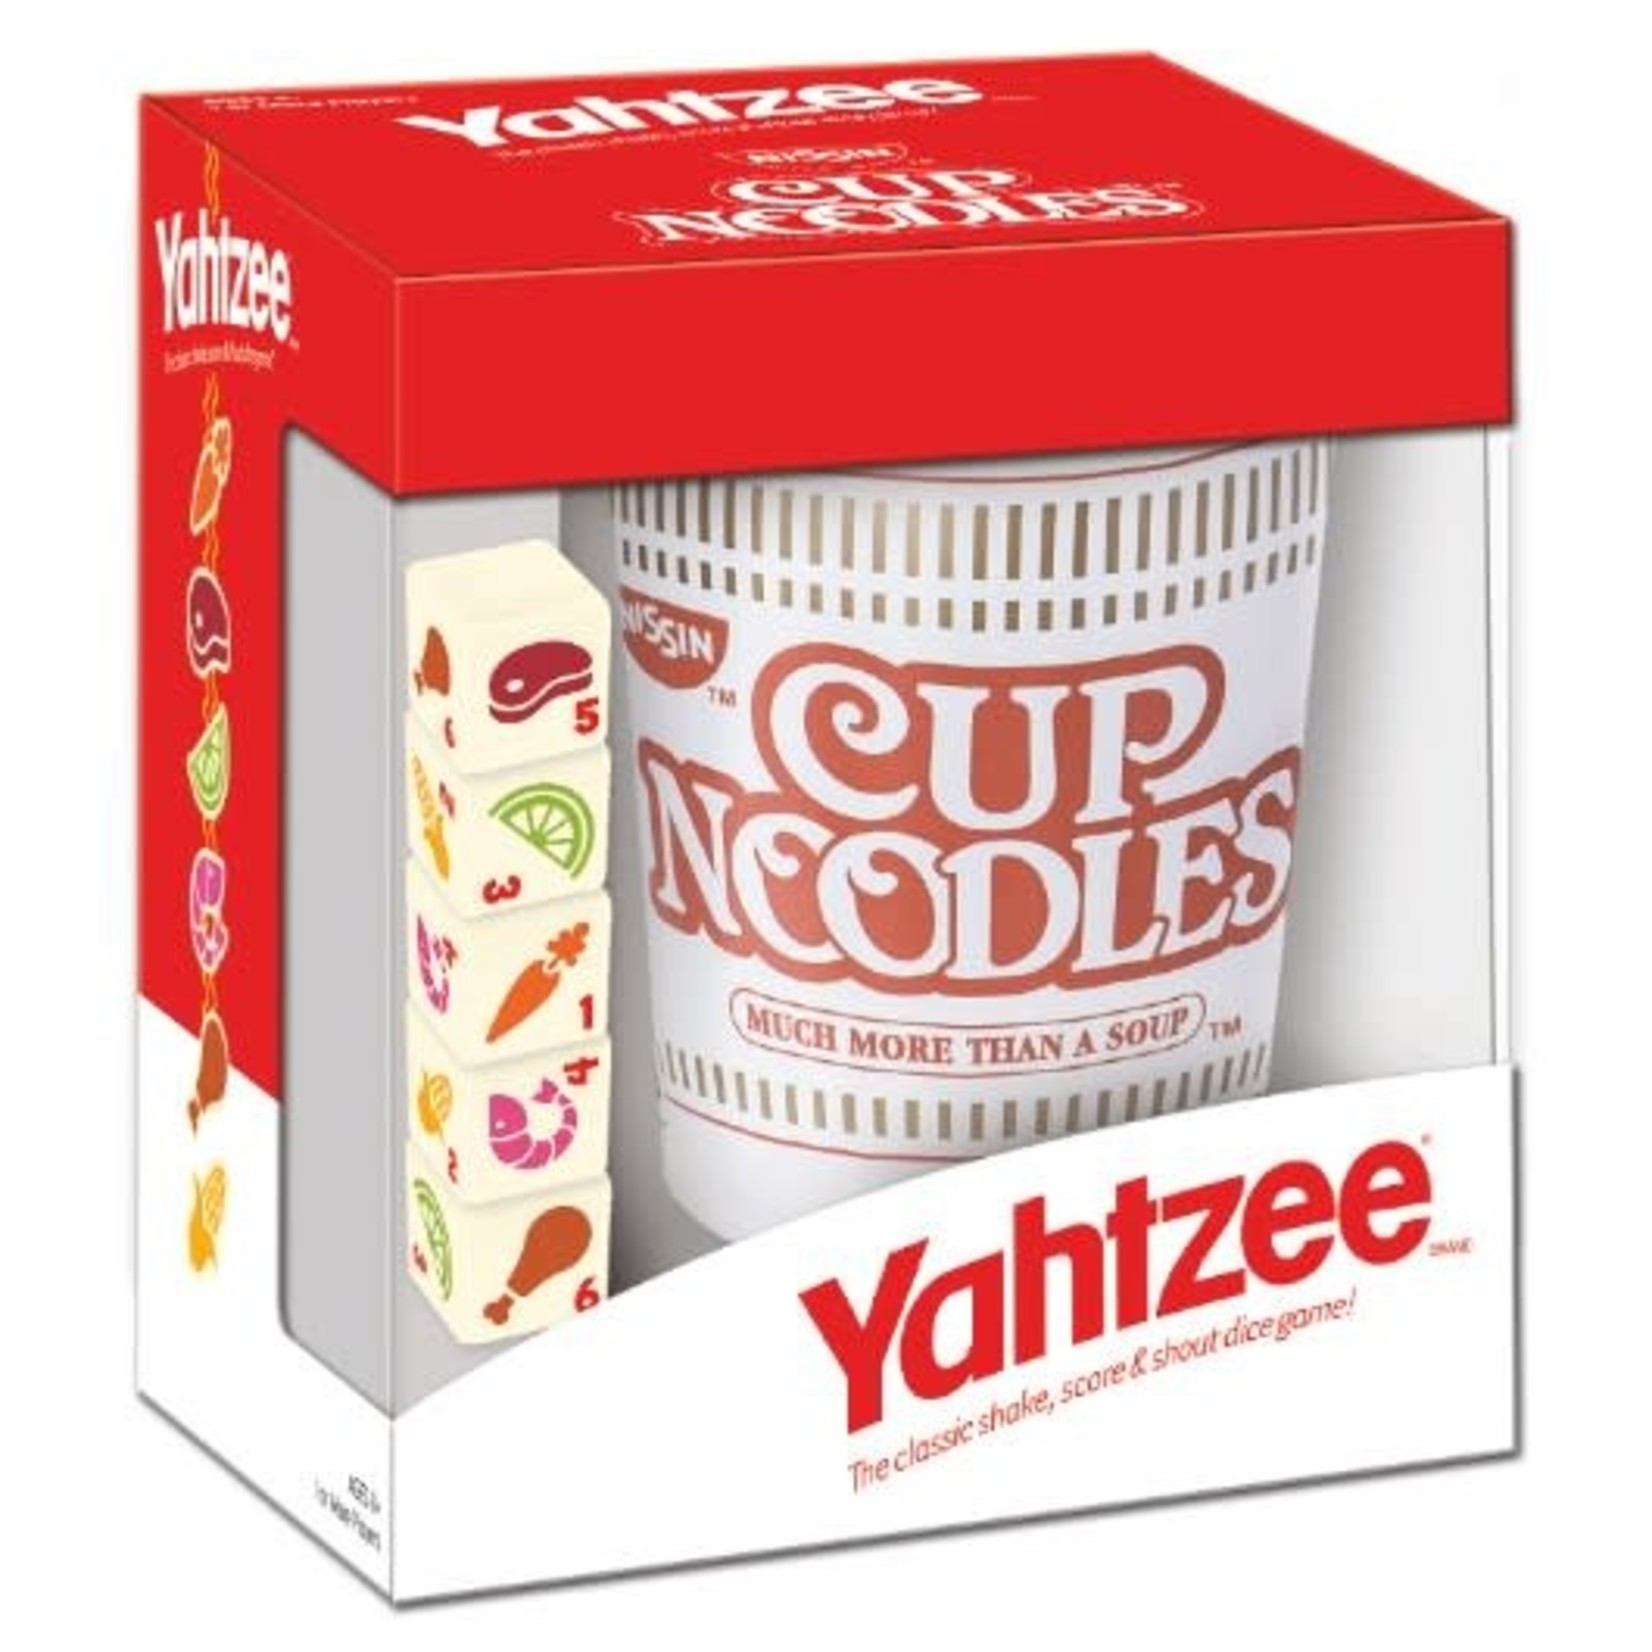 USAoploy Yahtzee: Cup Noodles